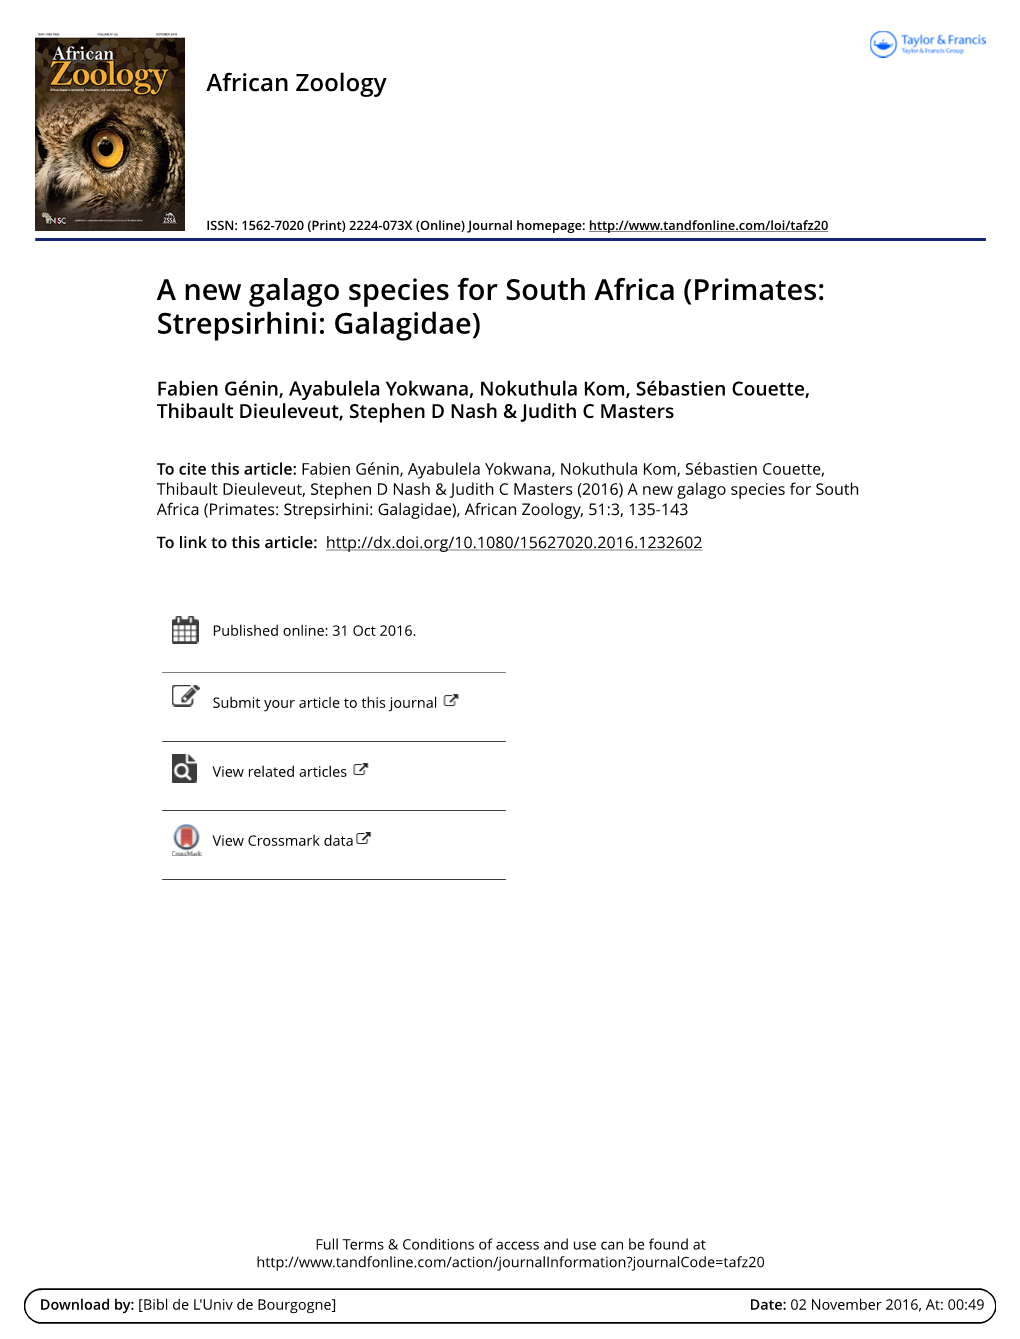 A New Galago Species for South Africa (Primates: Strepsirhini: Galagidae)